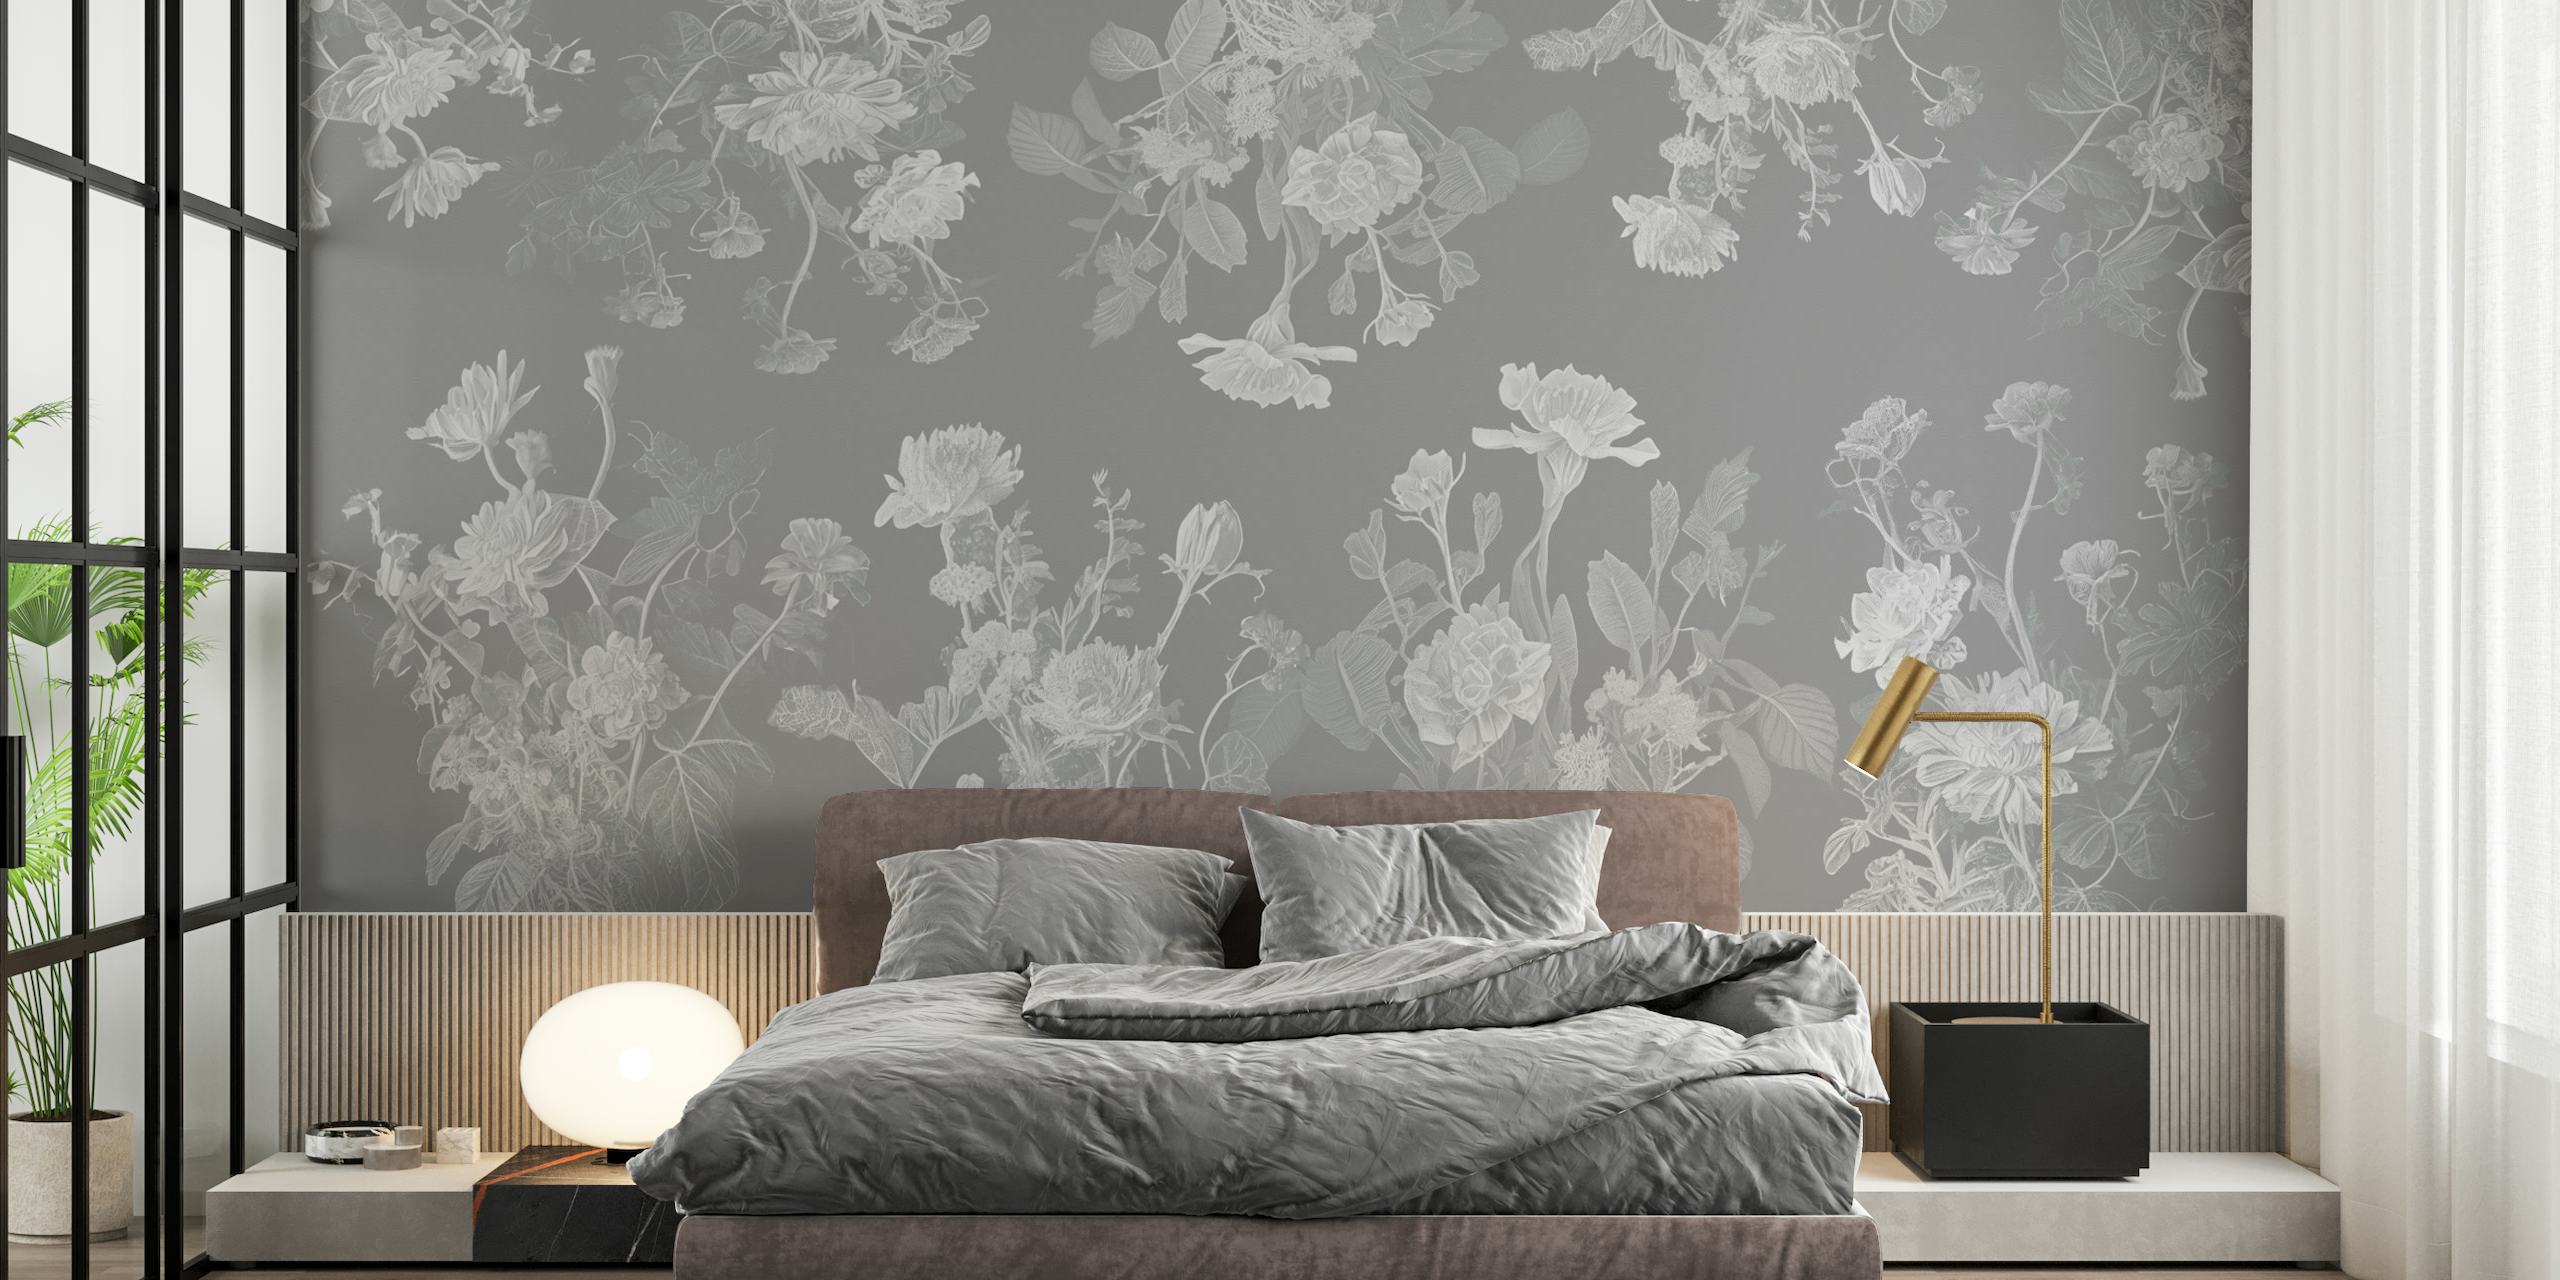 Bedroom flowers grey papel pintado